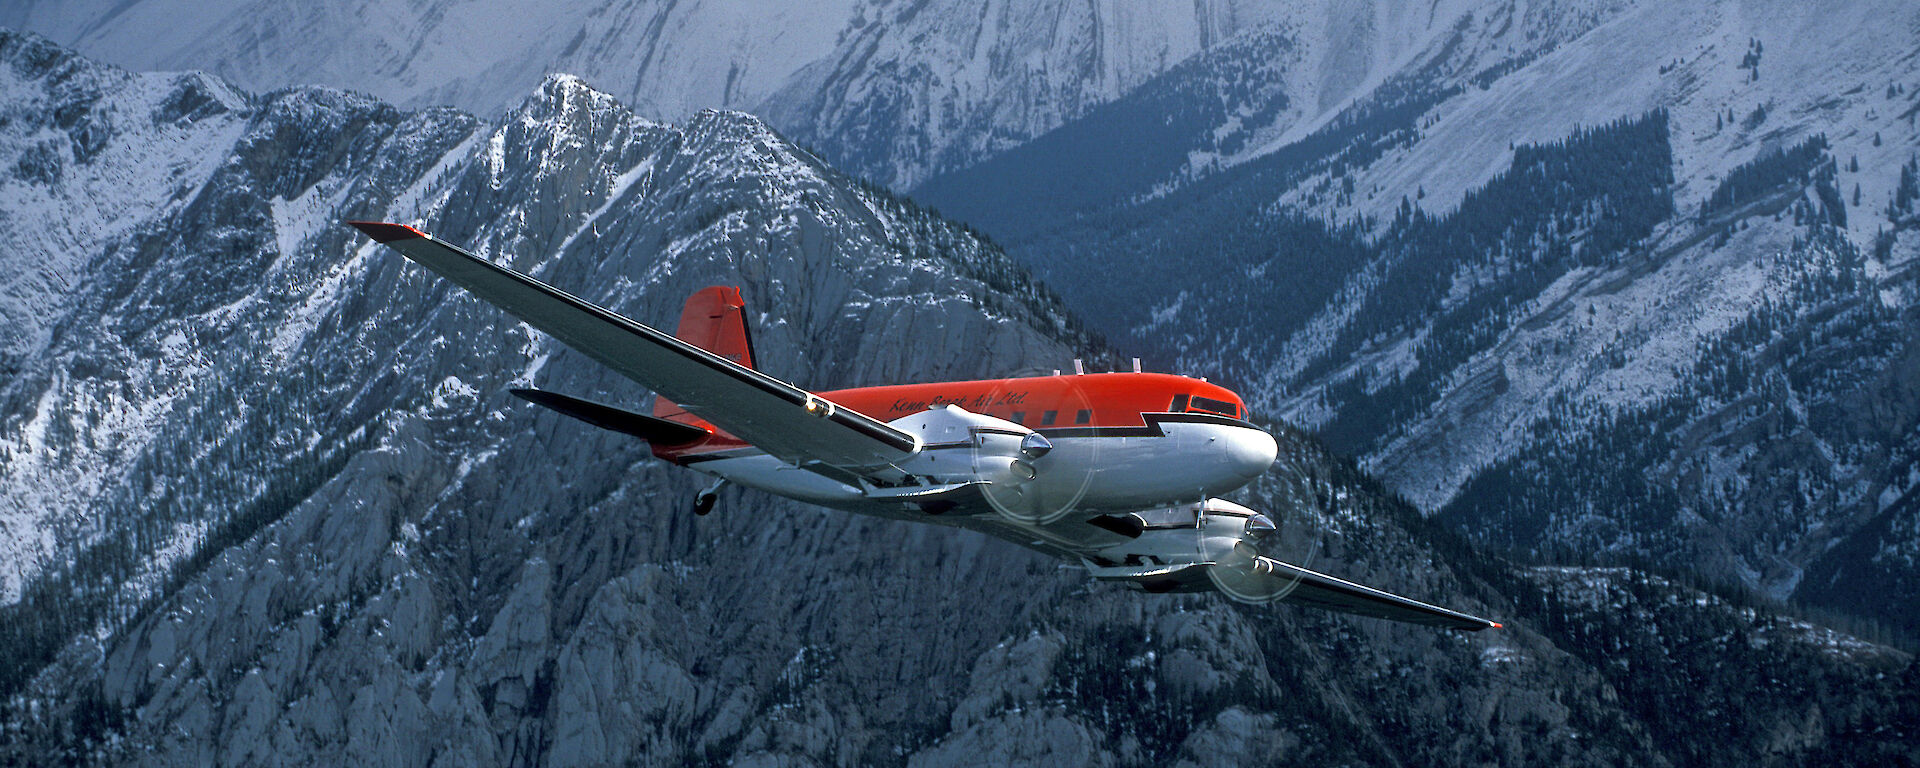 A ski-equipped Basler BT-67 turboprop in flight